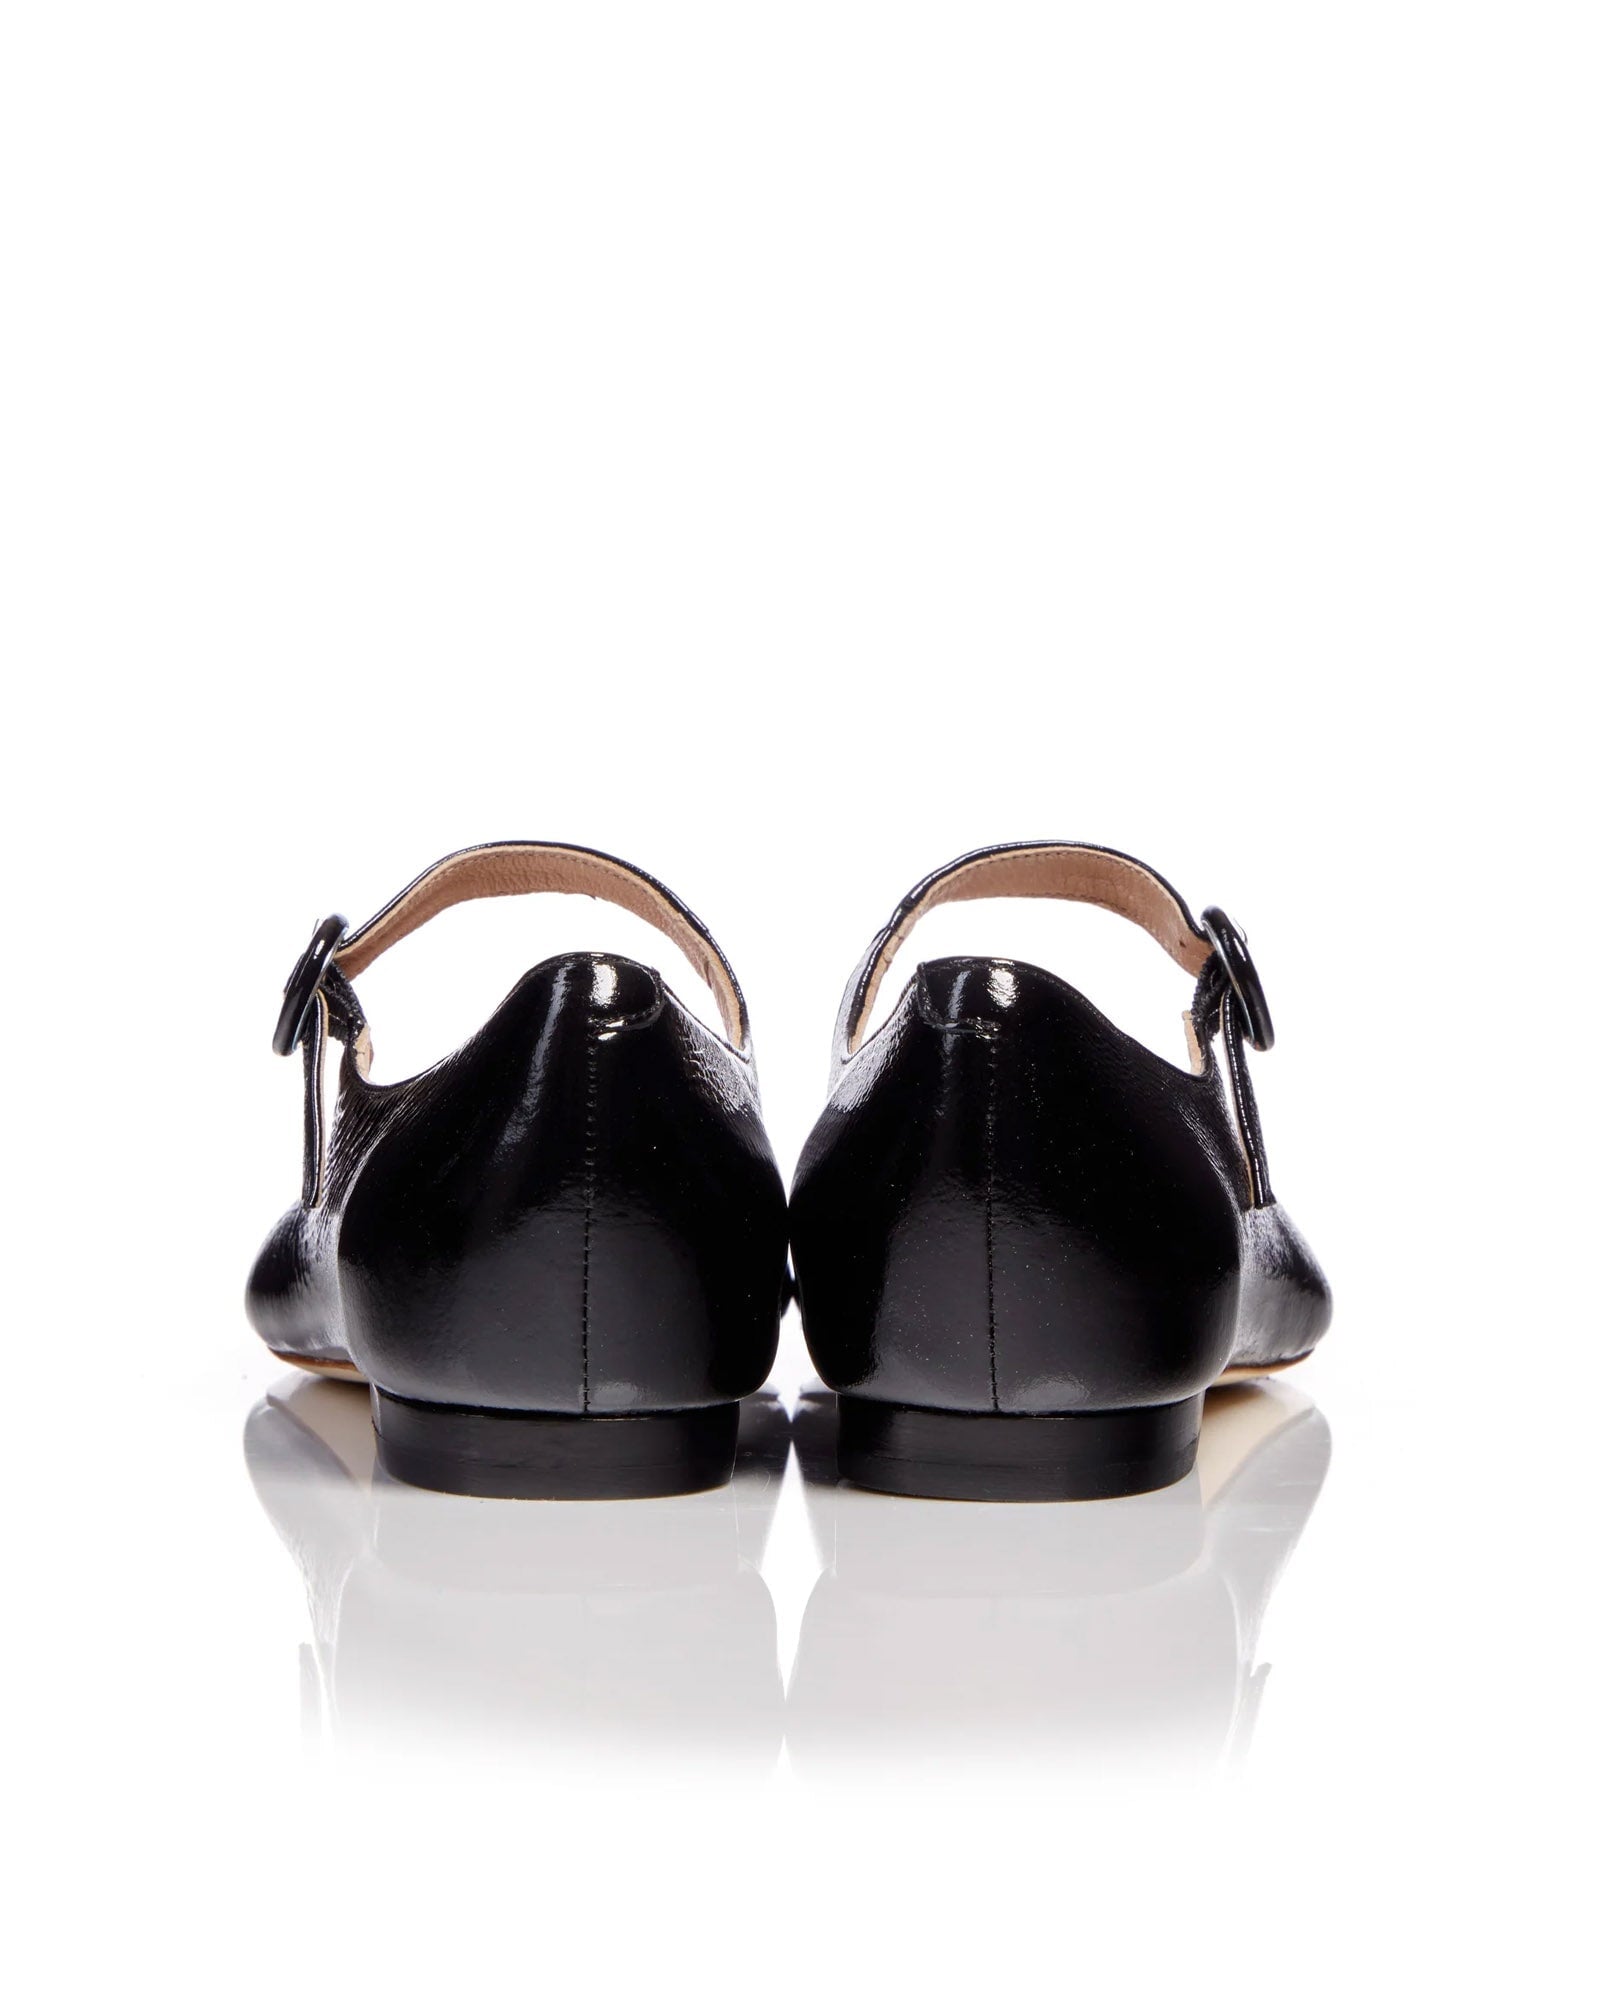 Eden Flat Patent Black Leather Fashion Shoe Black Leather Flat Shoe  image